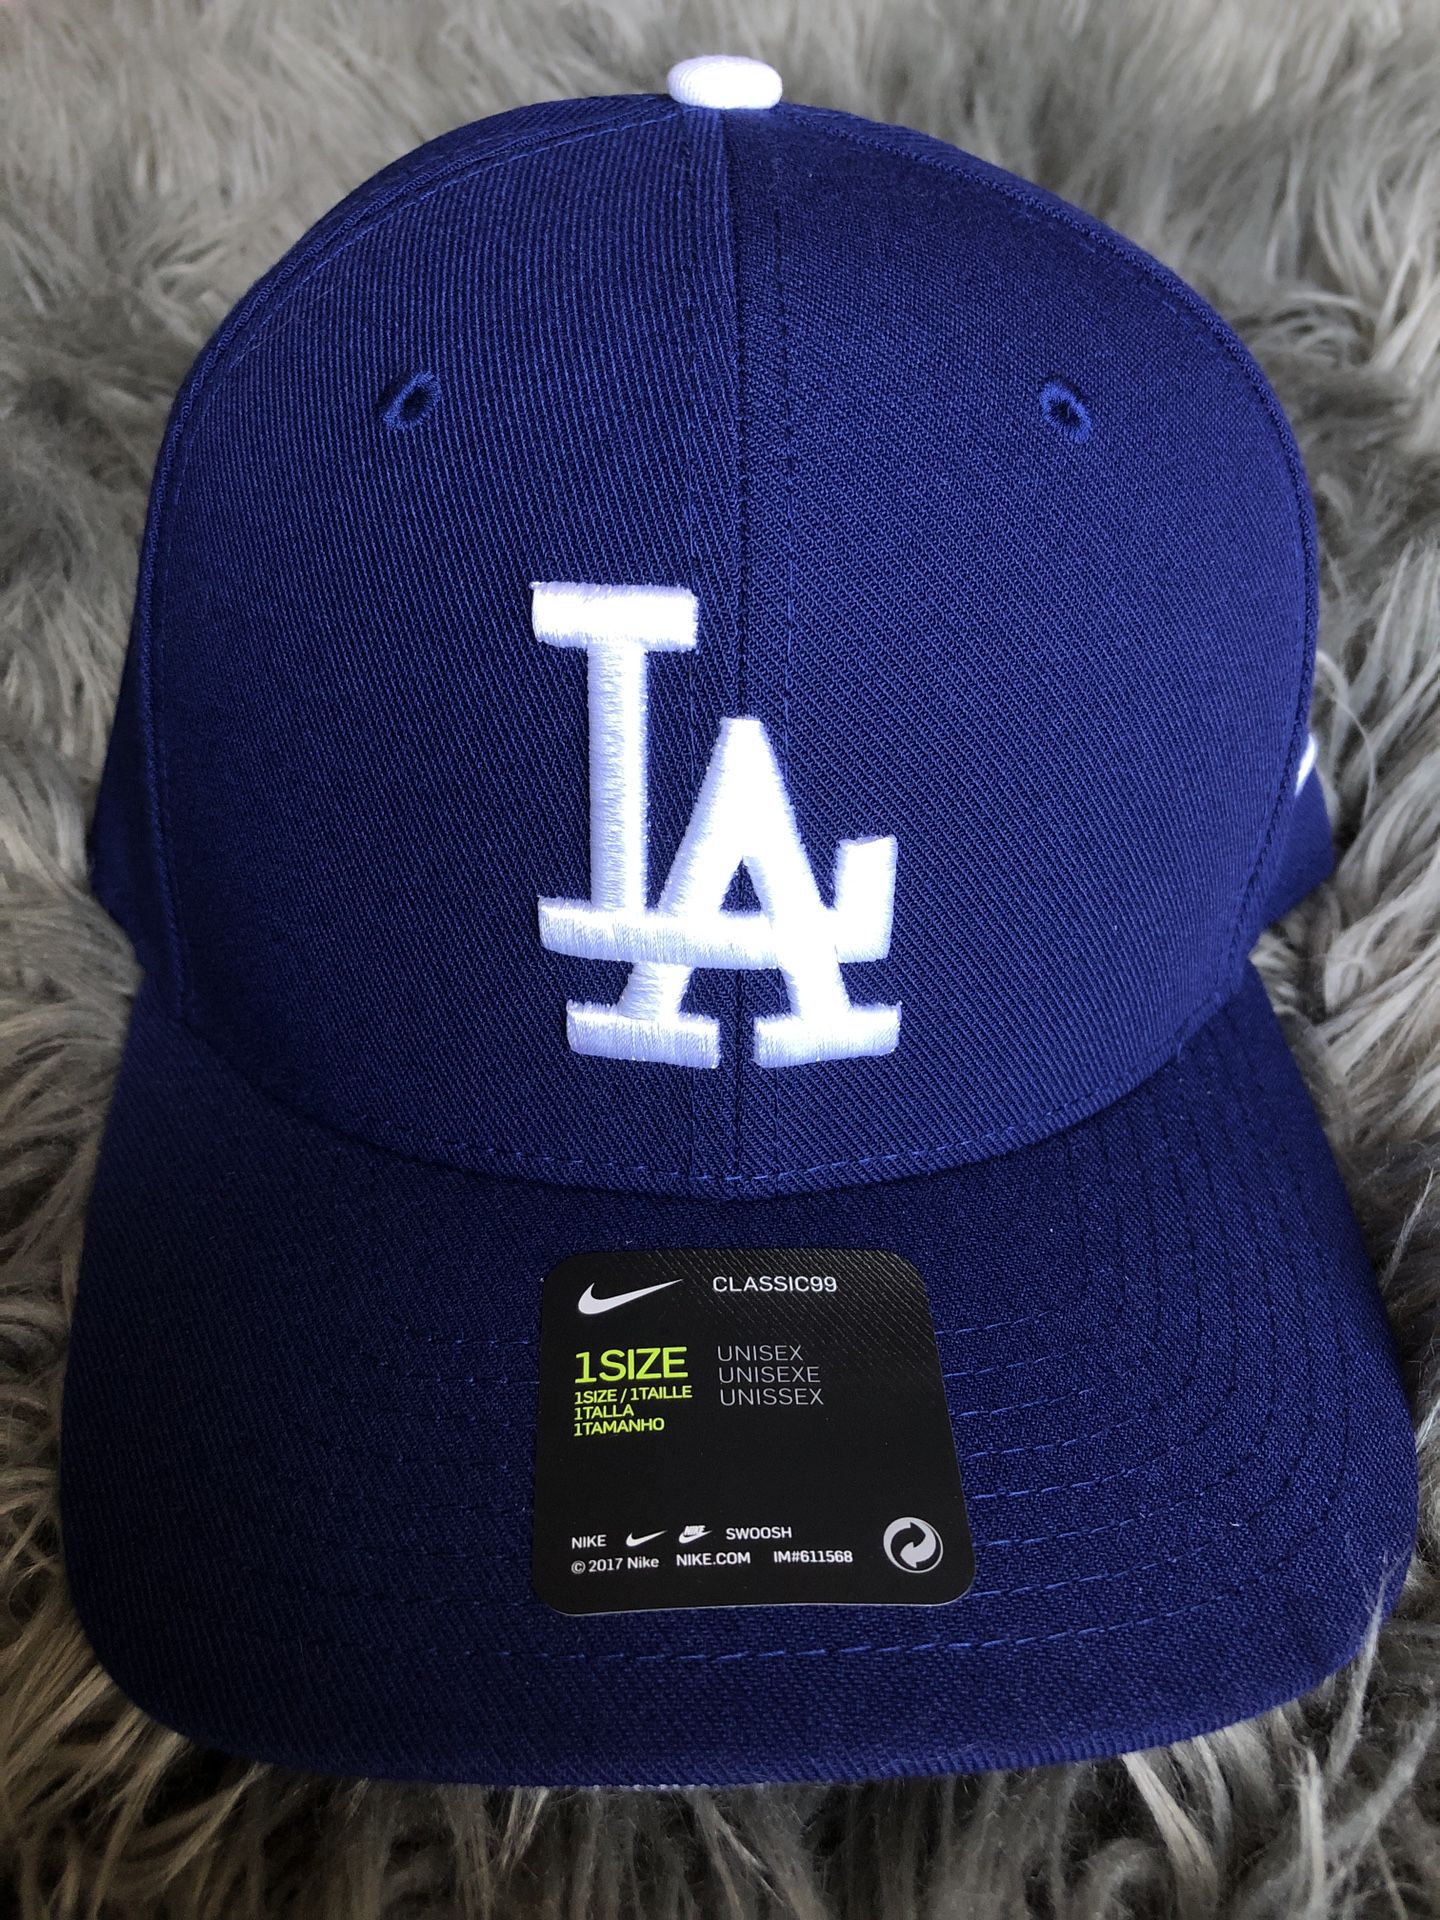 LA Dodgers Hat - Nike DriFit Classic 99 for Sale in Bloomington, CA